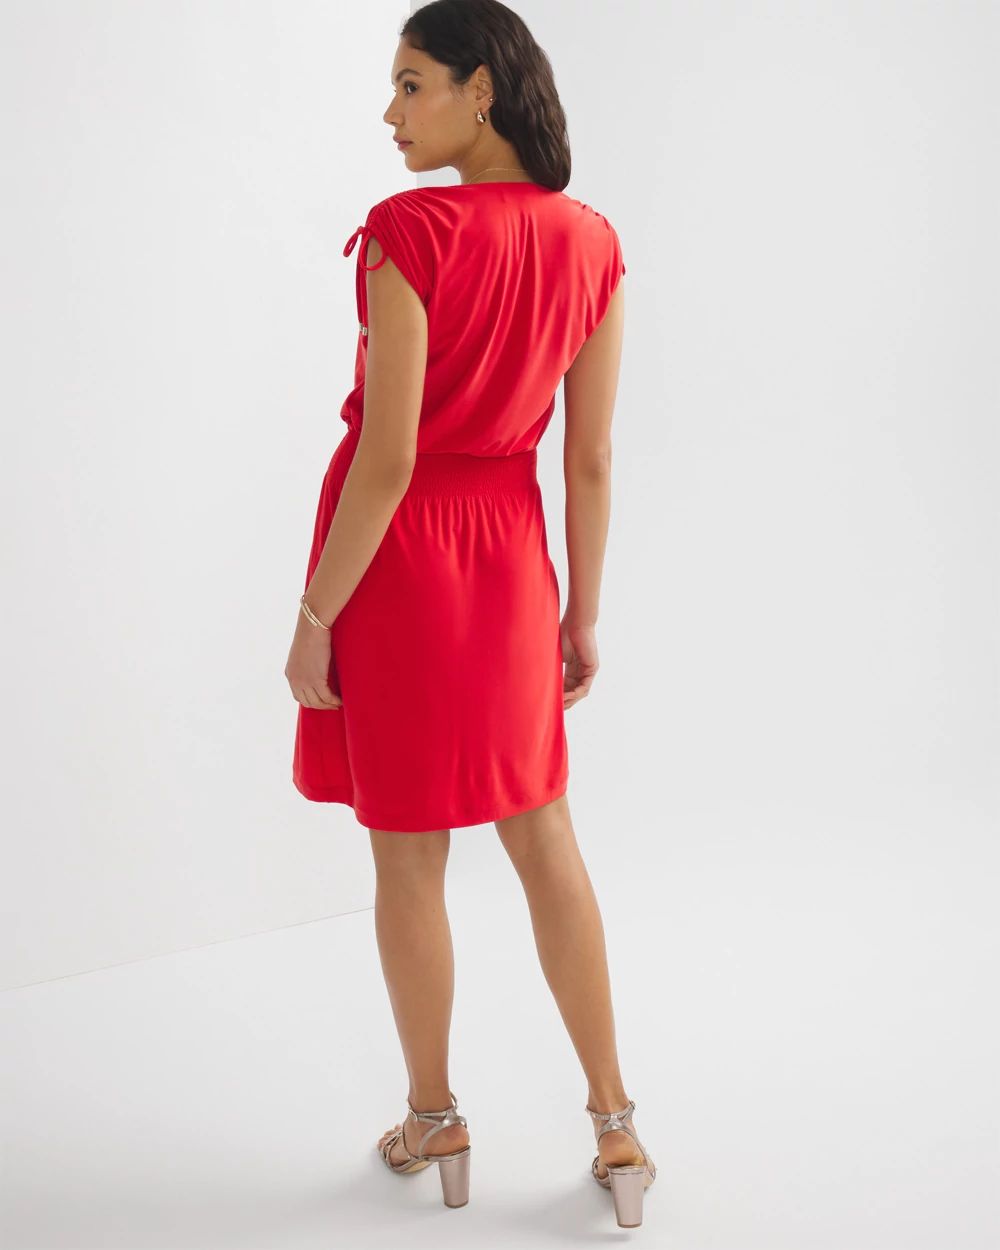 Tie-Shoulder Mini Dress click to view larger image.